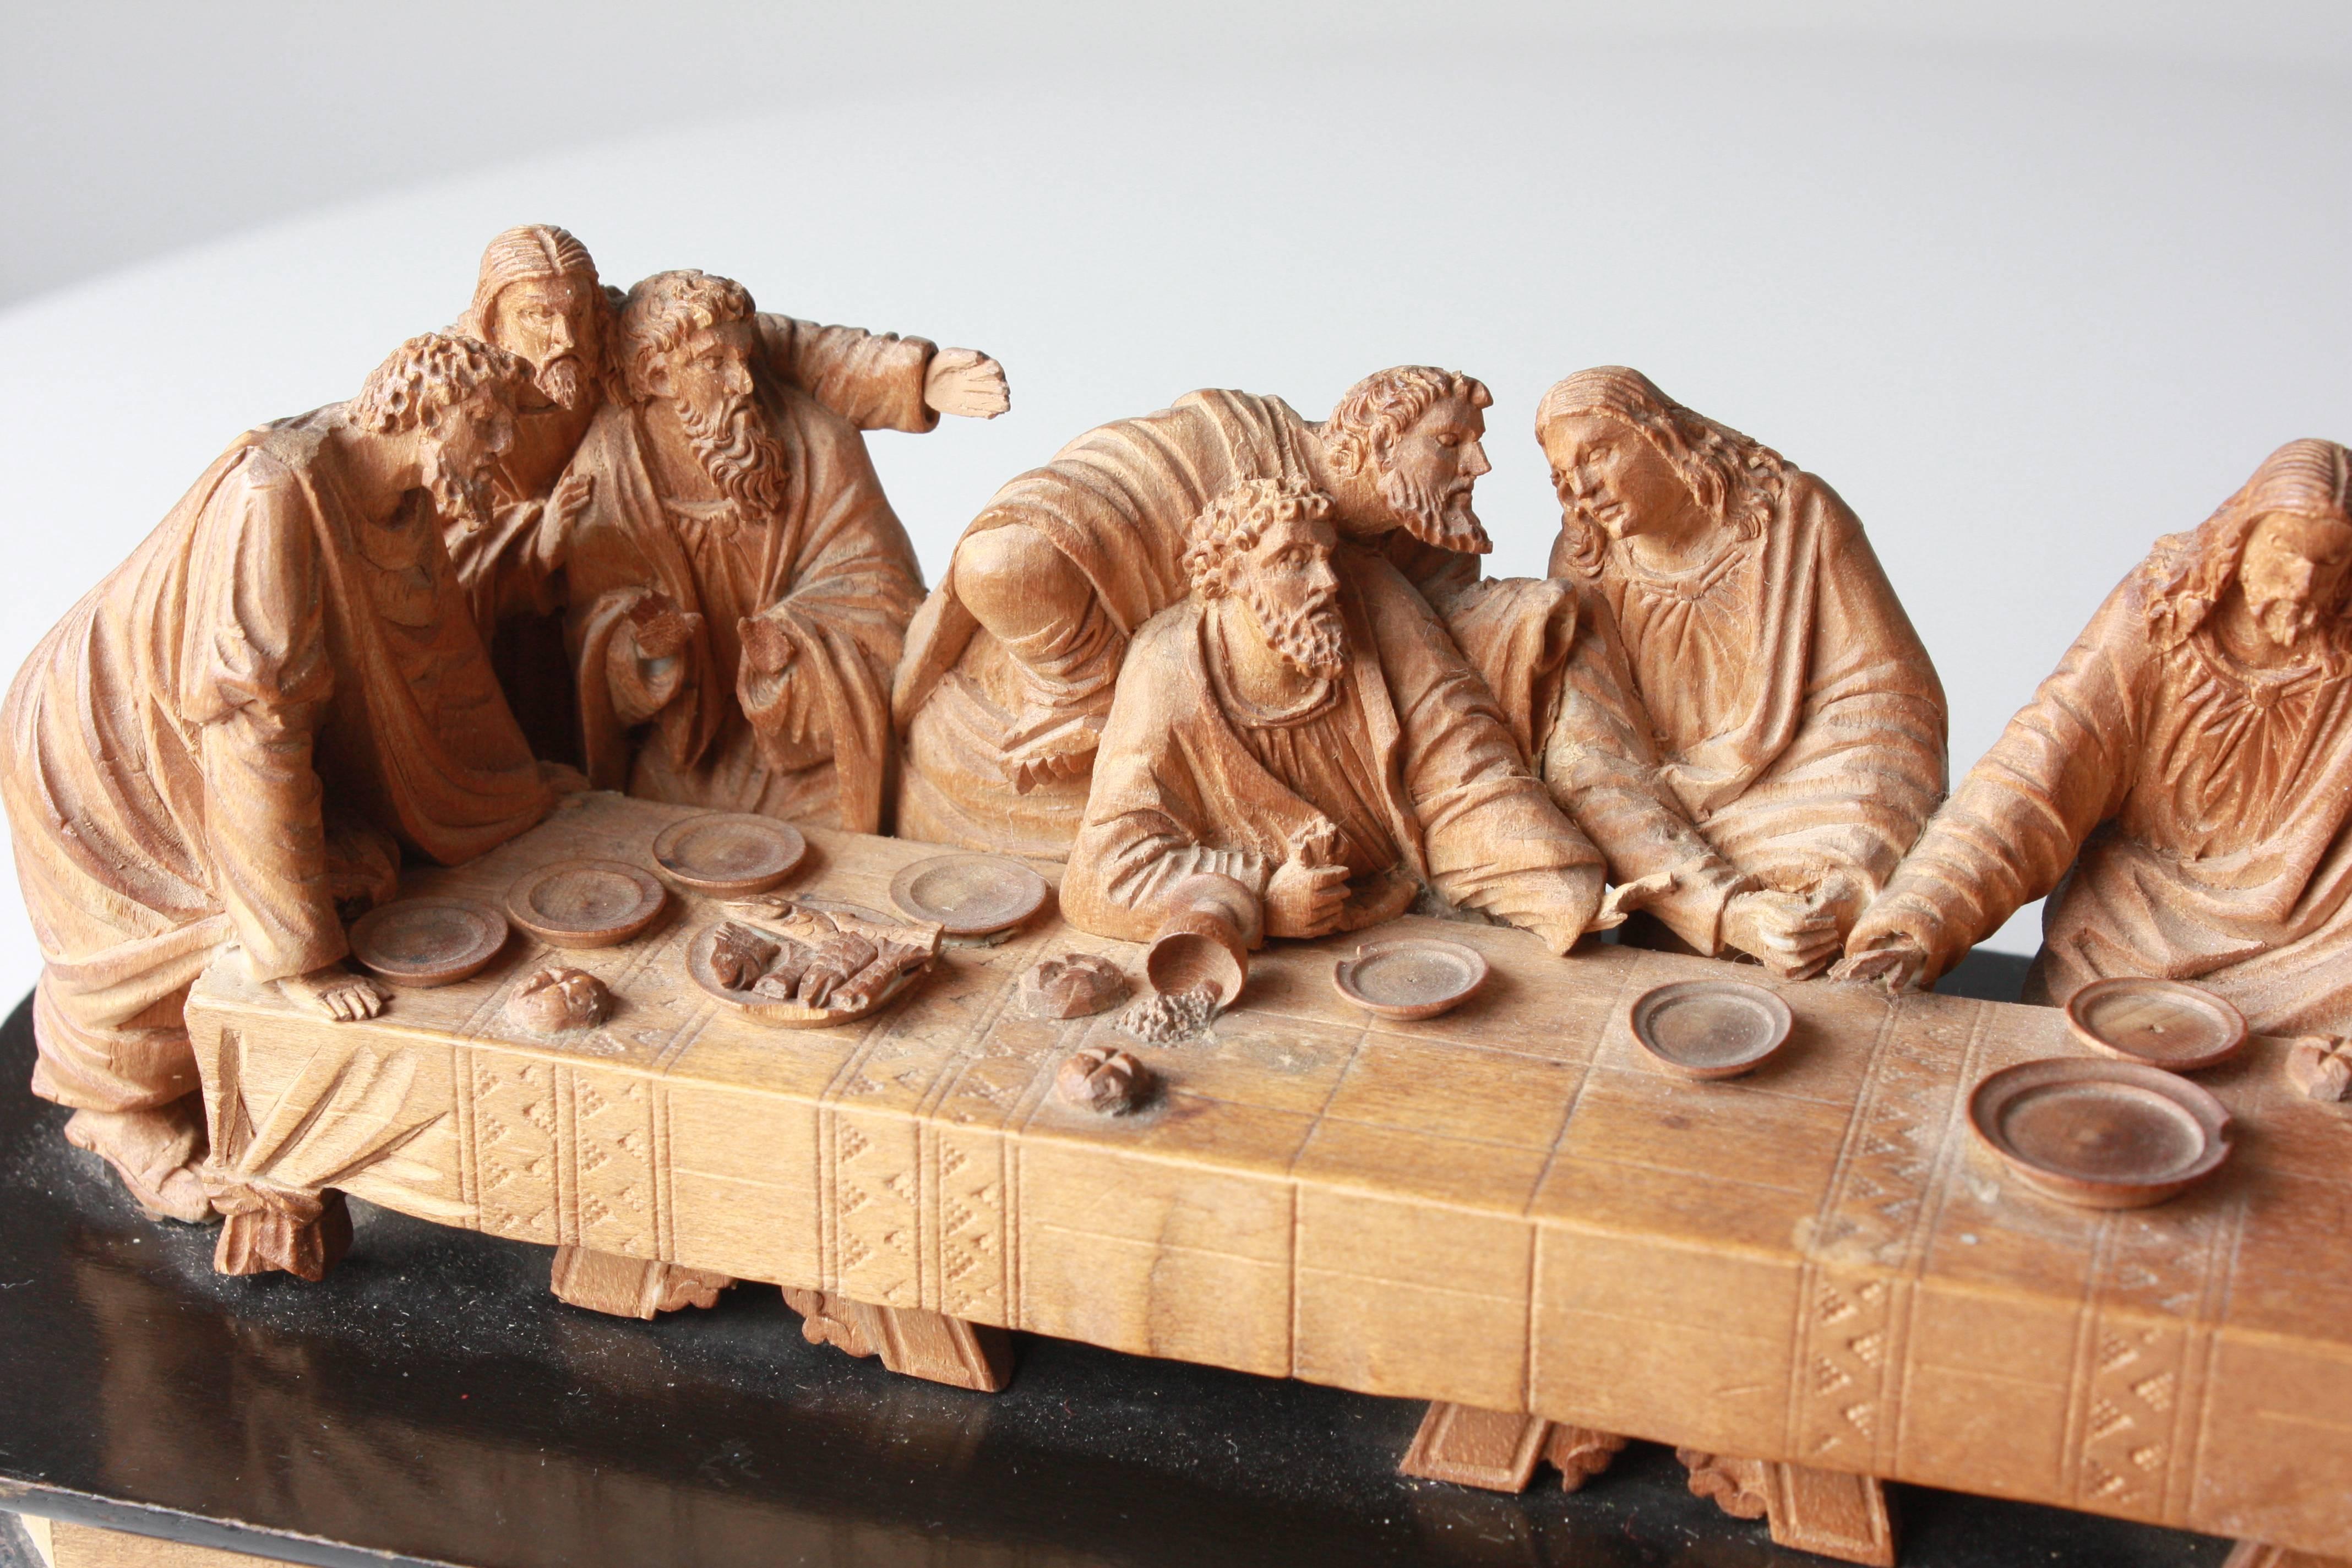 A fantastic carving of Leonardo's Last Supper.

The piece measure 12